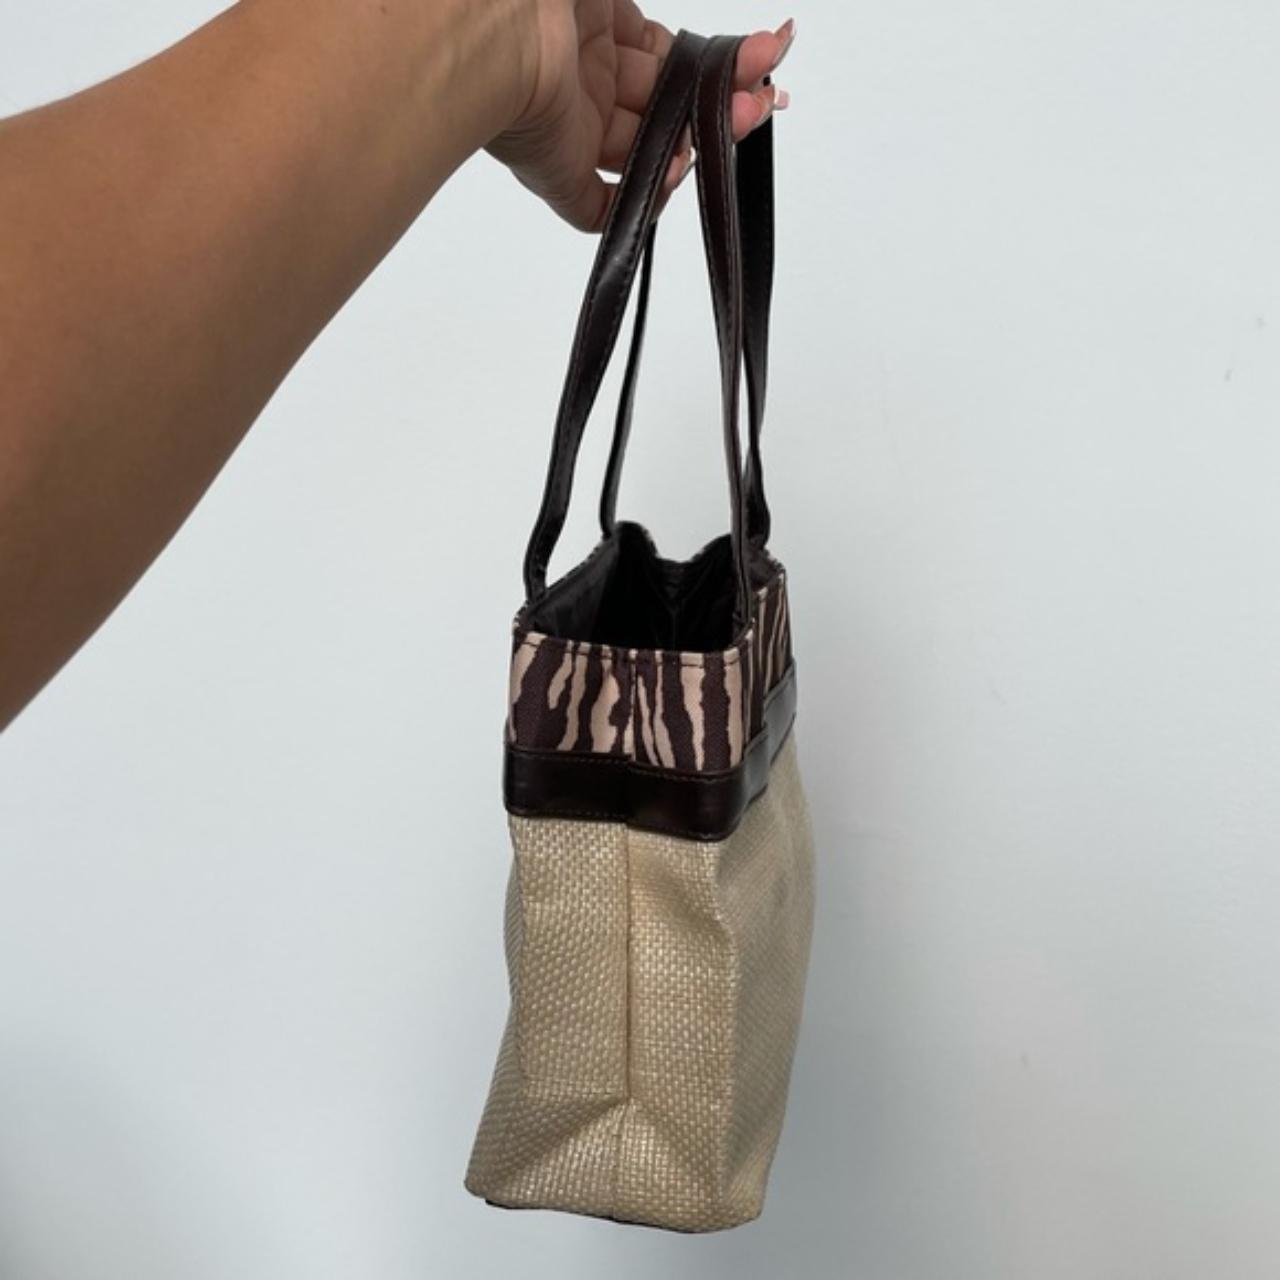 Product Image 3 - estee lauder
zebra print handbag, straw